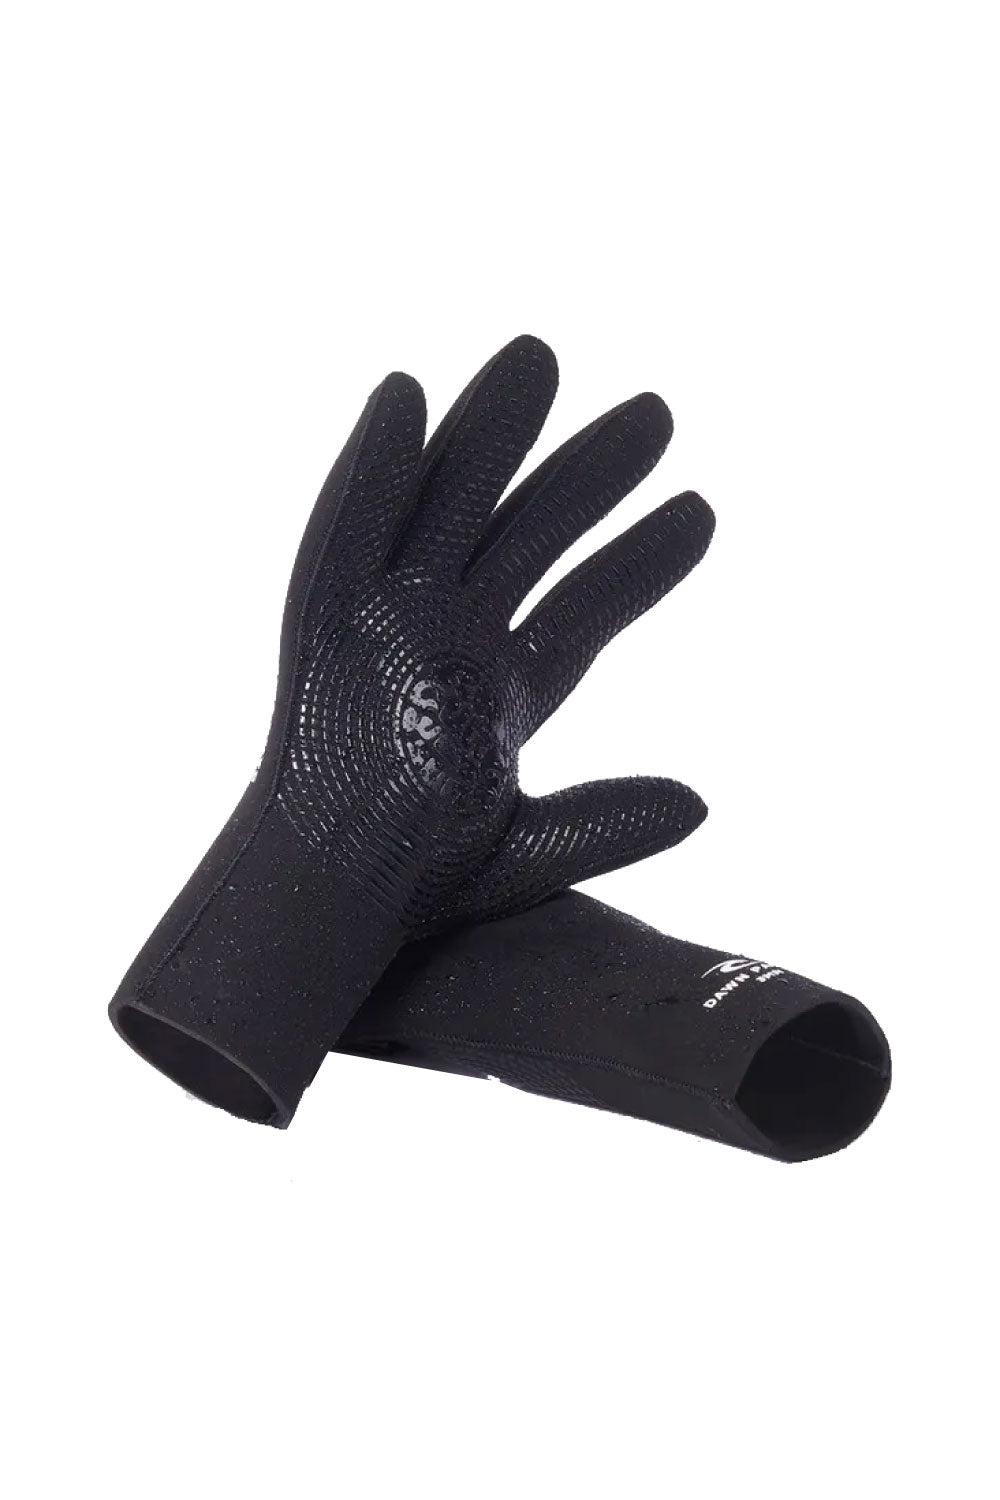 Rip Curl Dawn Patrol 3mm Wetsuit Gloves